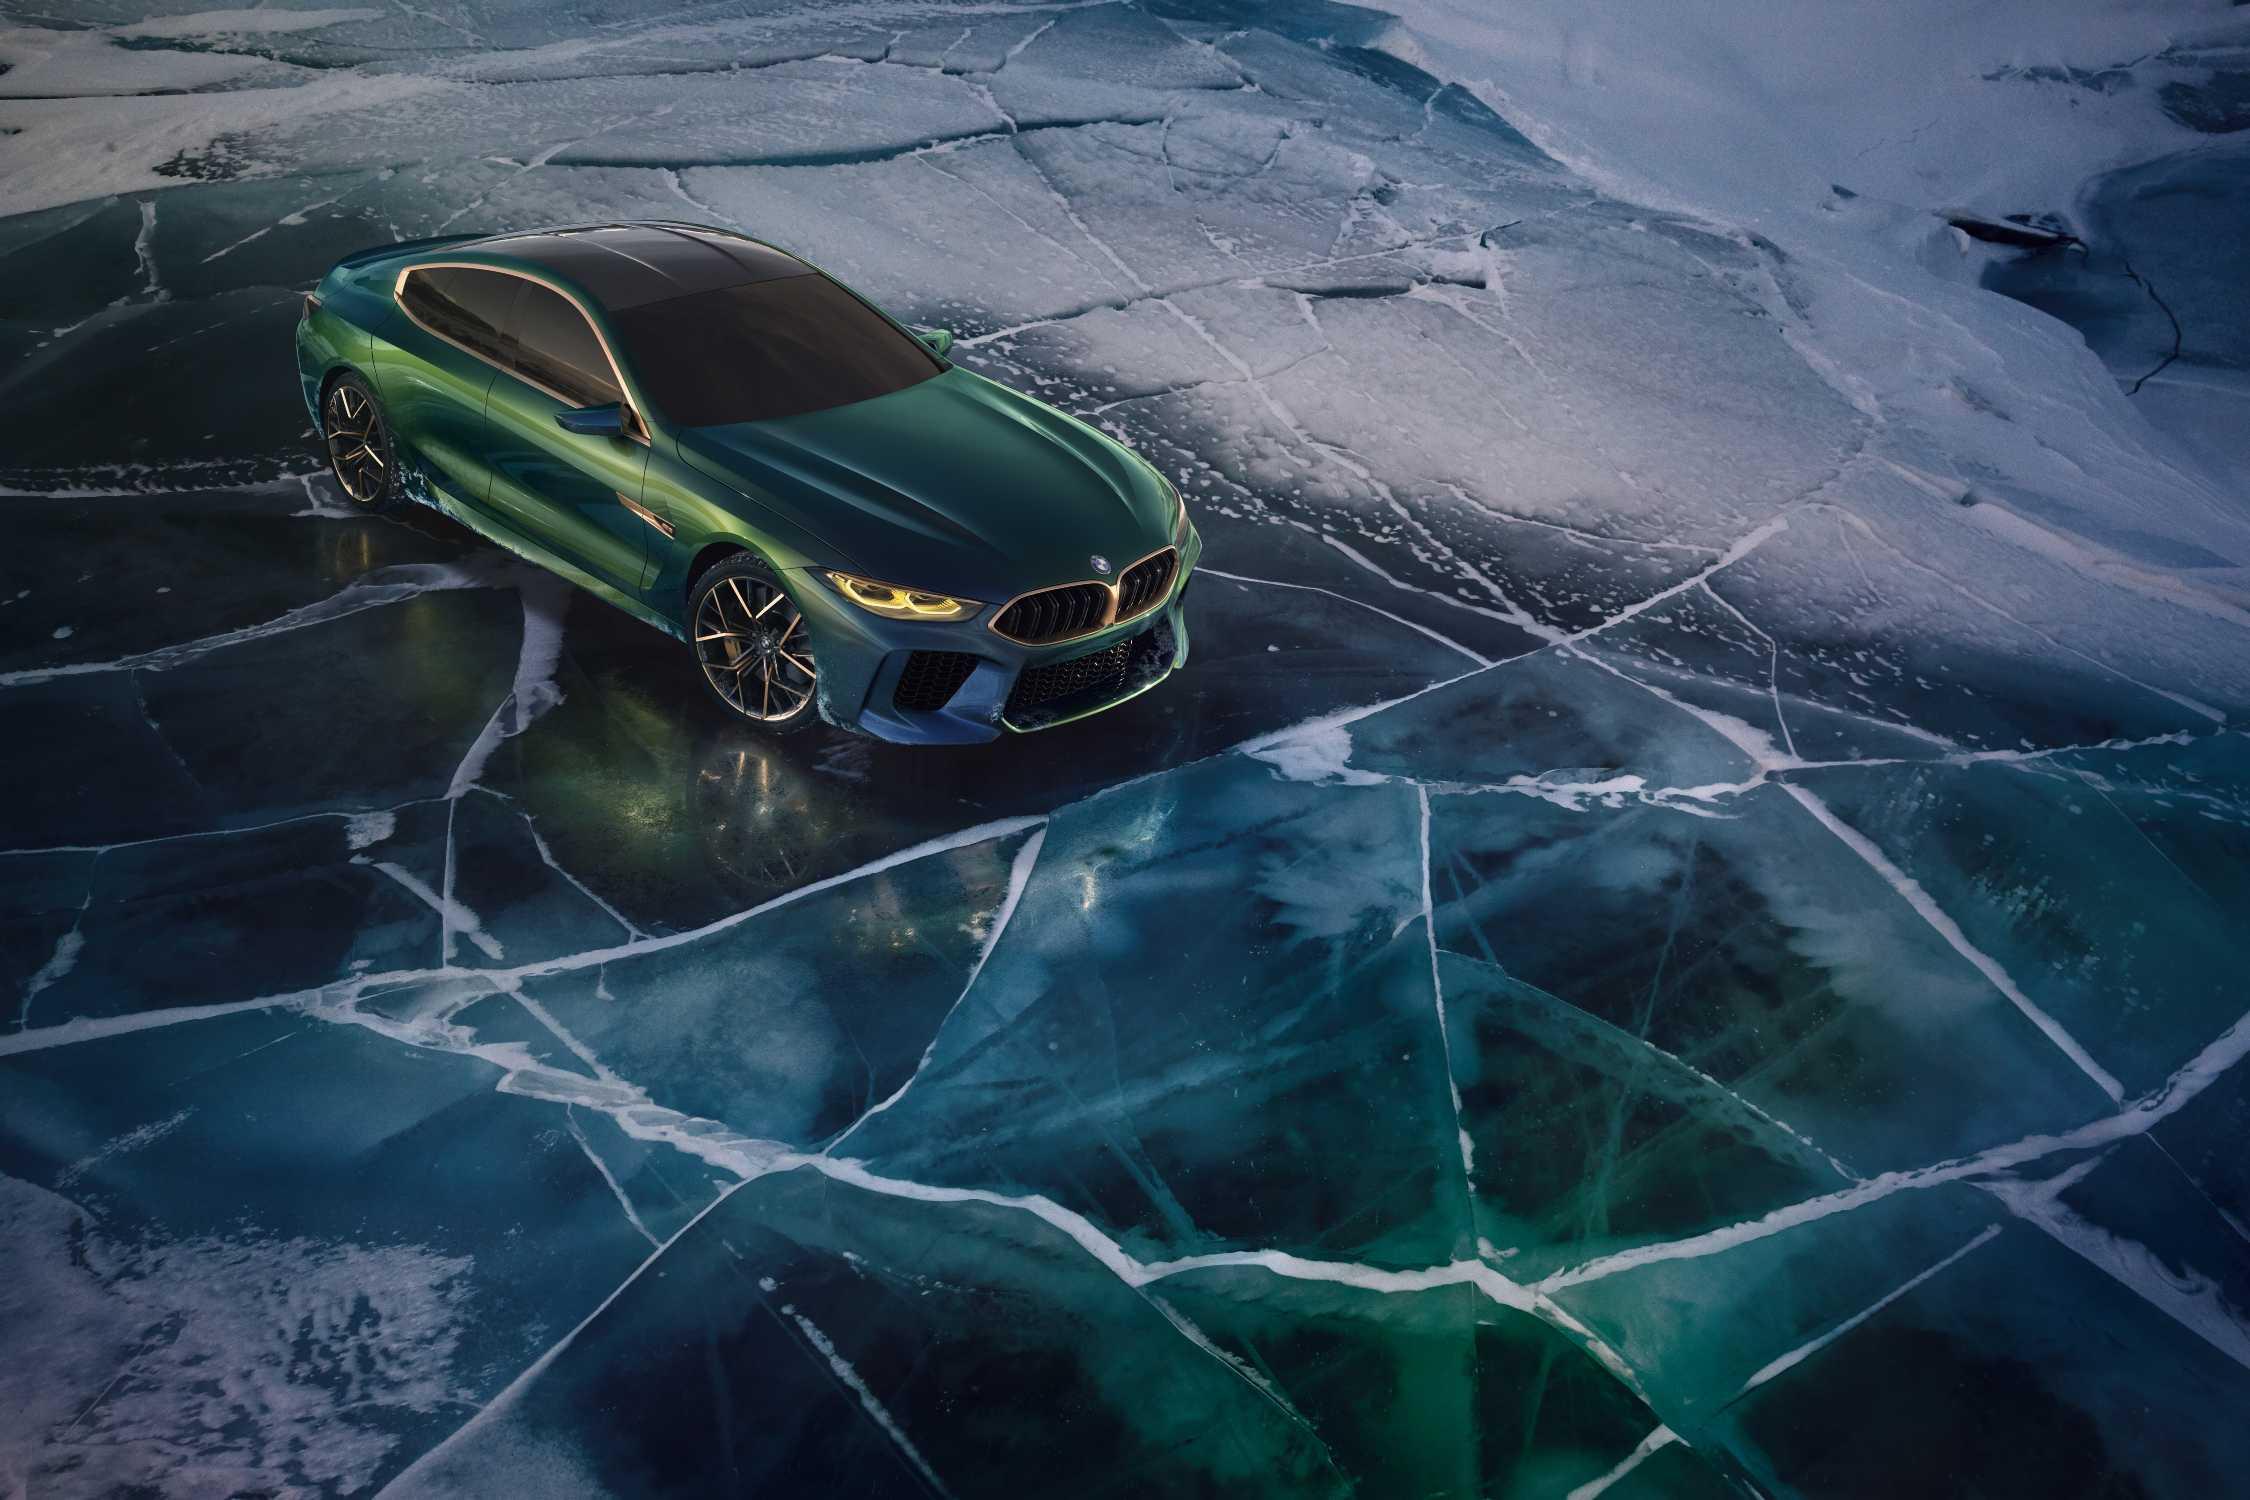 The BMW Concept M8 Gran Coupe showcases a new interpretation